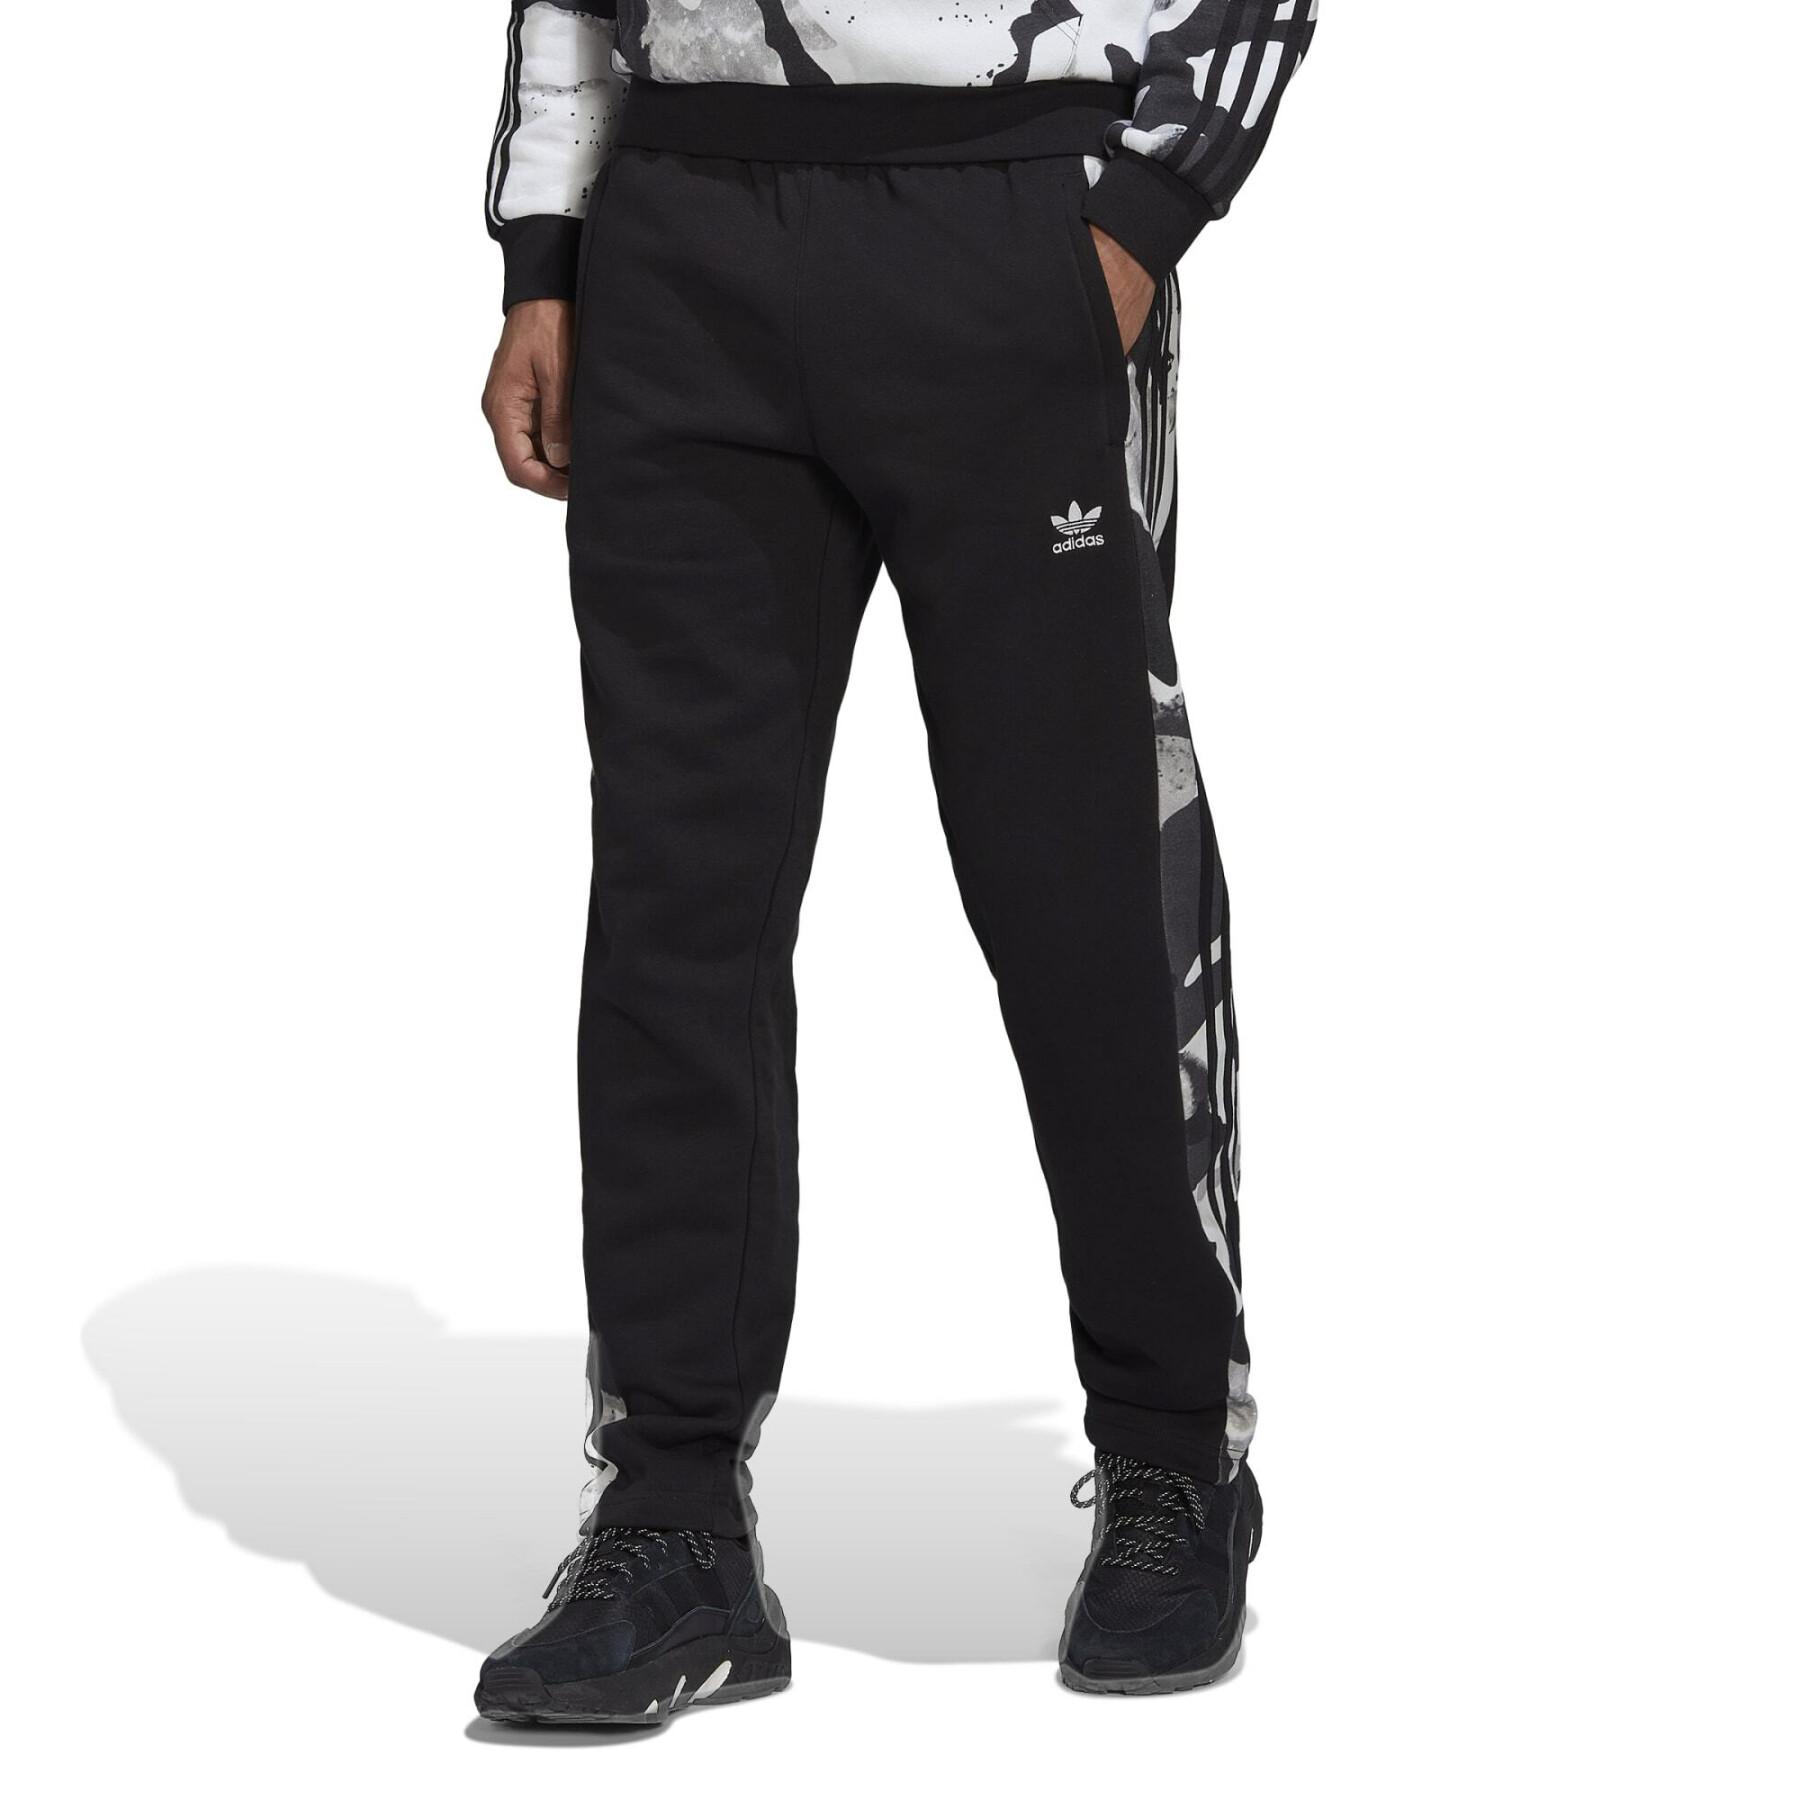 Fleece jogging suit adidas Originals Series